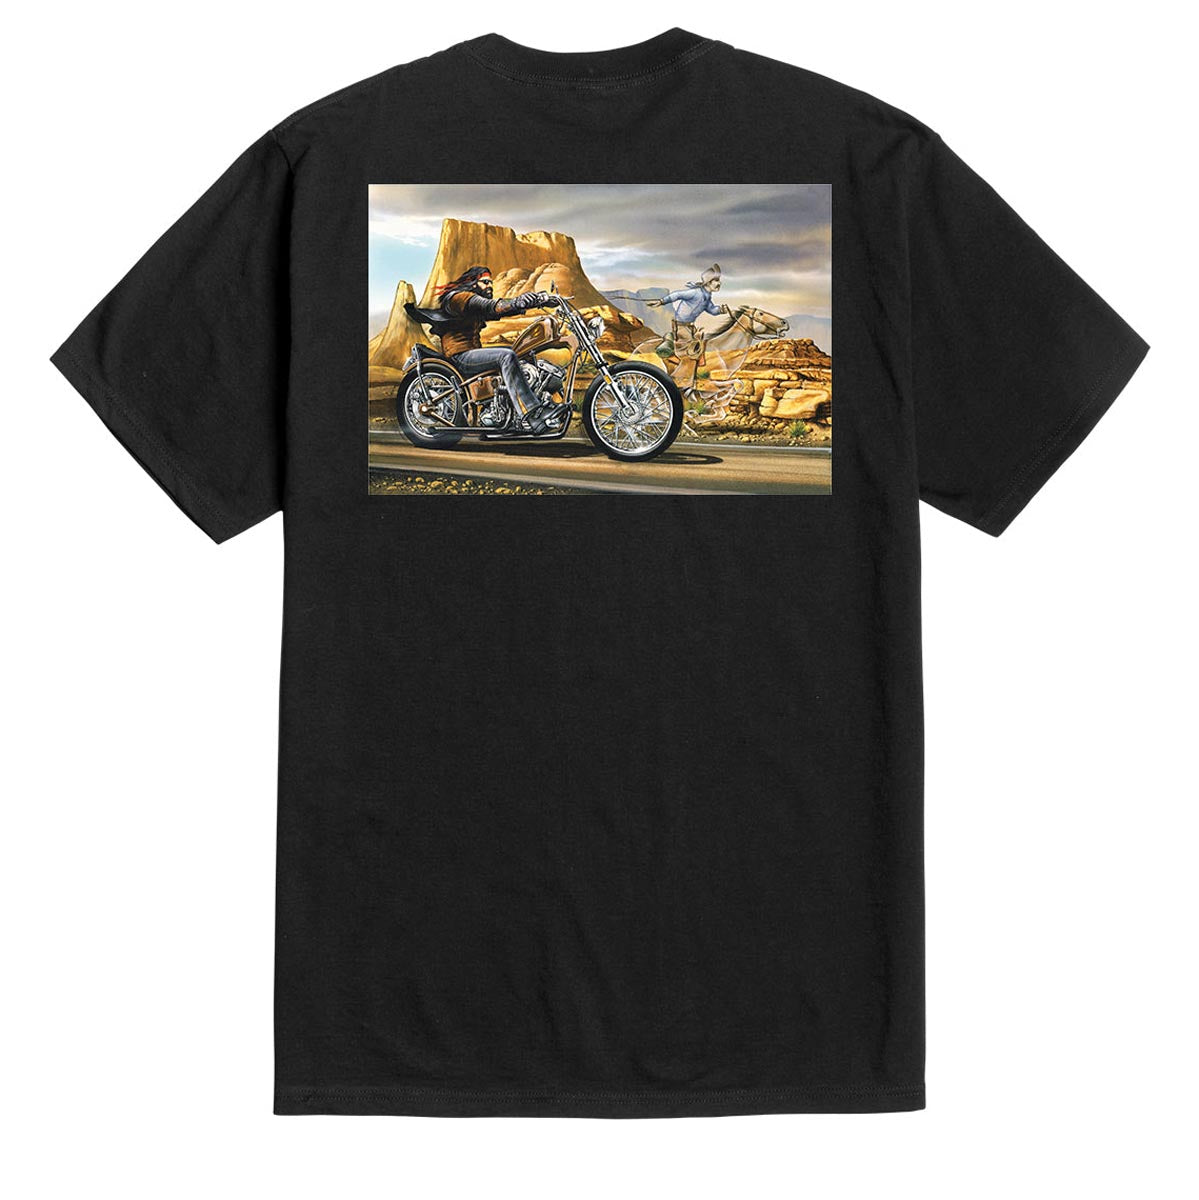 Loser Machine Ghost Rider T-Shirt - Black image 1